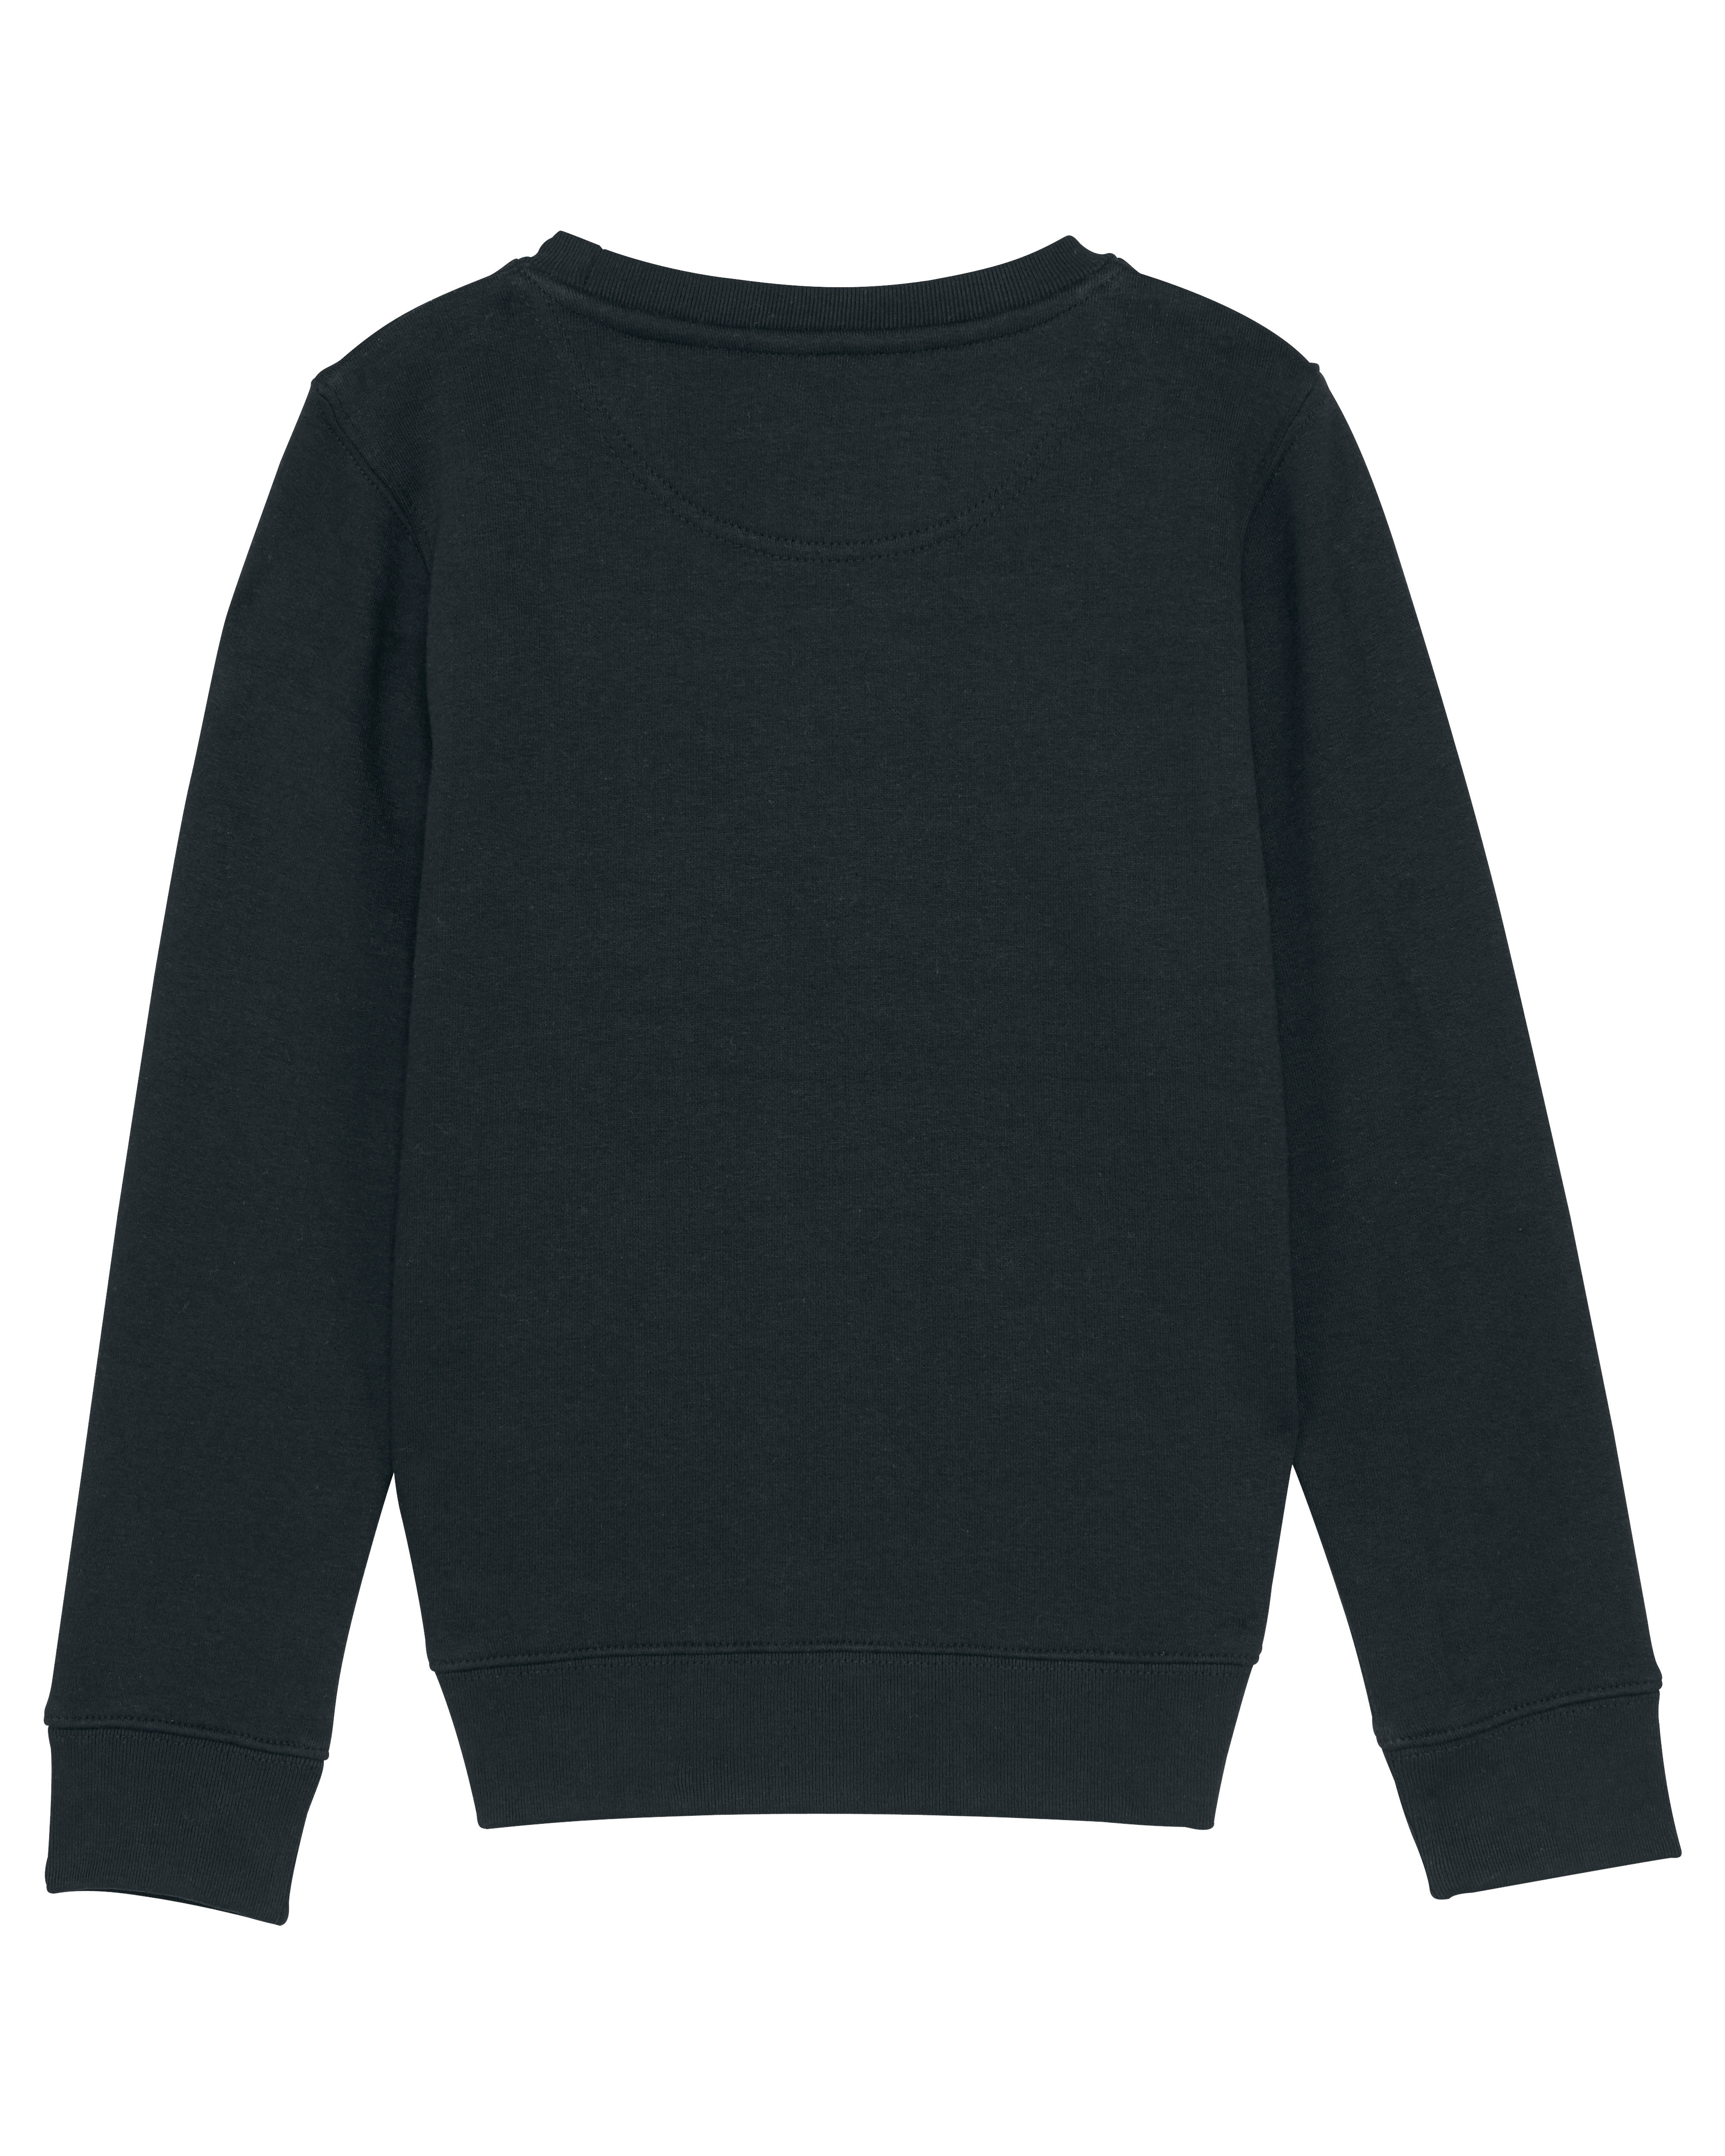 XMAS Kids Sweatshirt - Too cute to wear ugly sweaters